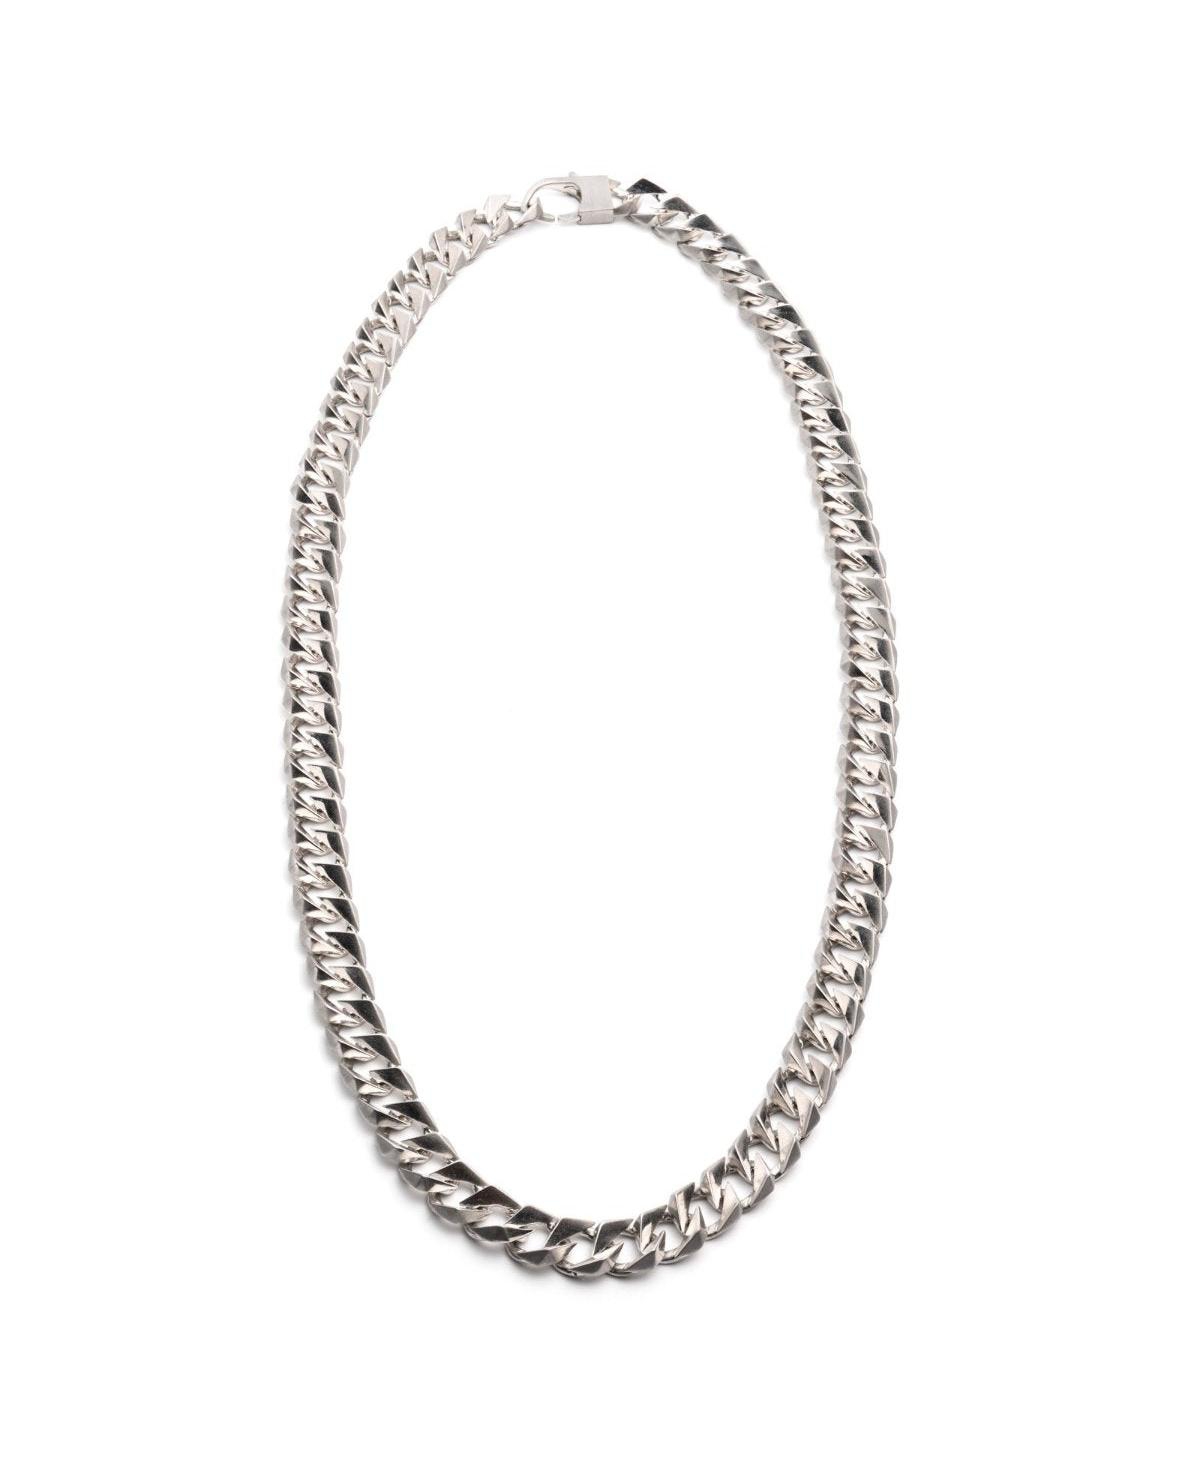 Prizm Link Necklace - Silver